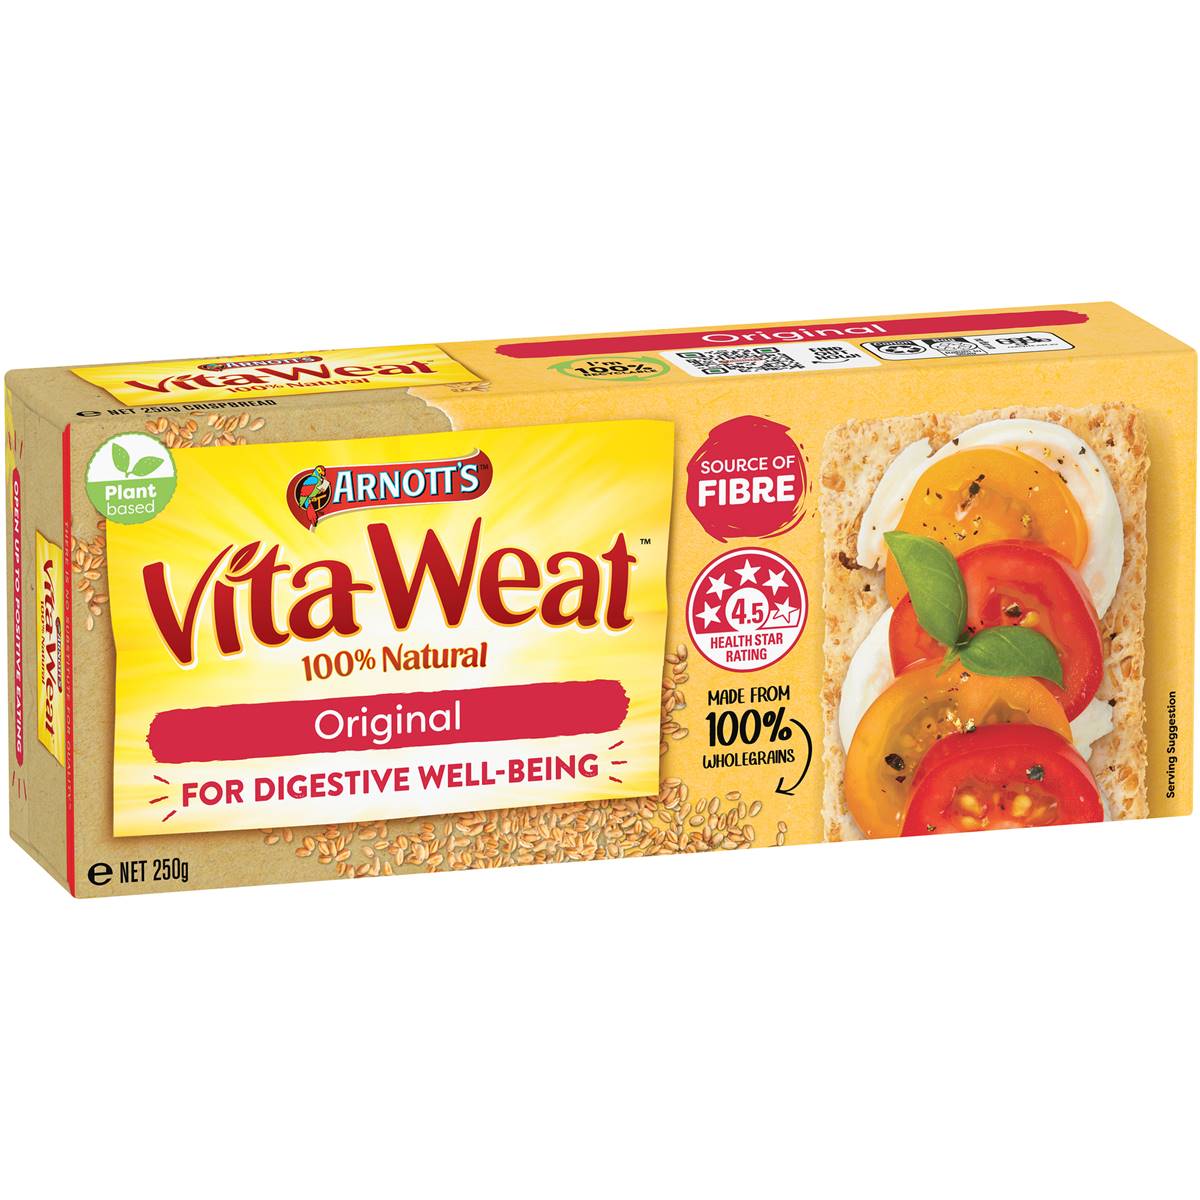 Calories in Arnott's Vita Weat Original Crispbreads Original